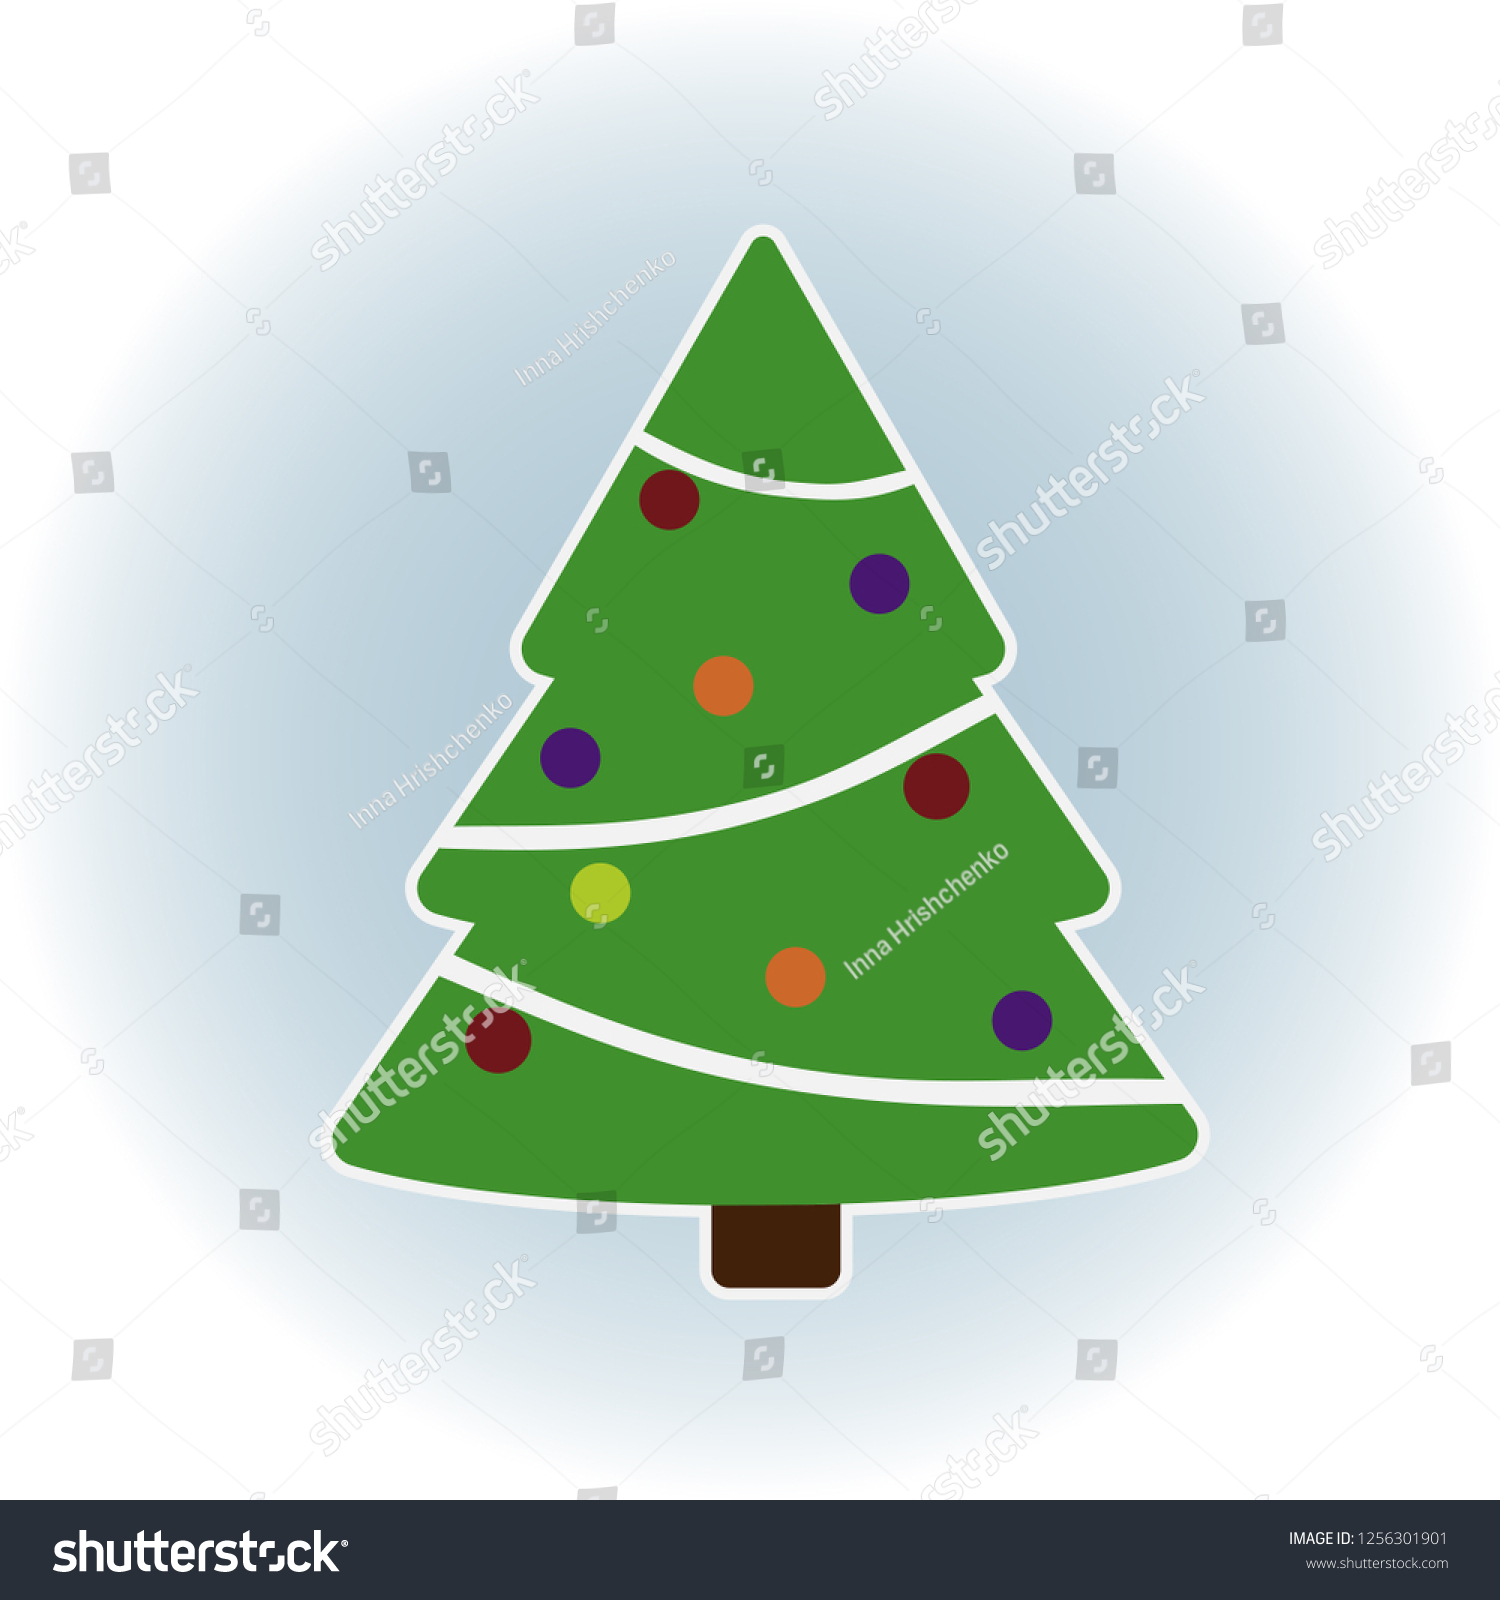 Green Christmas Tree Toys Illustration Print Stock Vector Royalty Free 1256301901